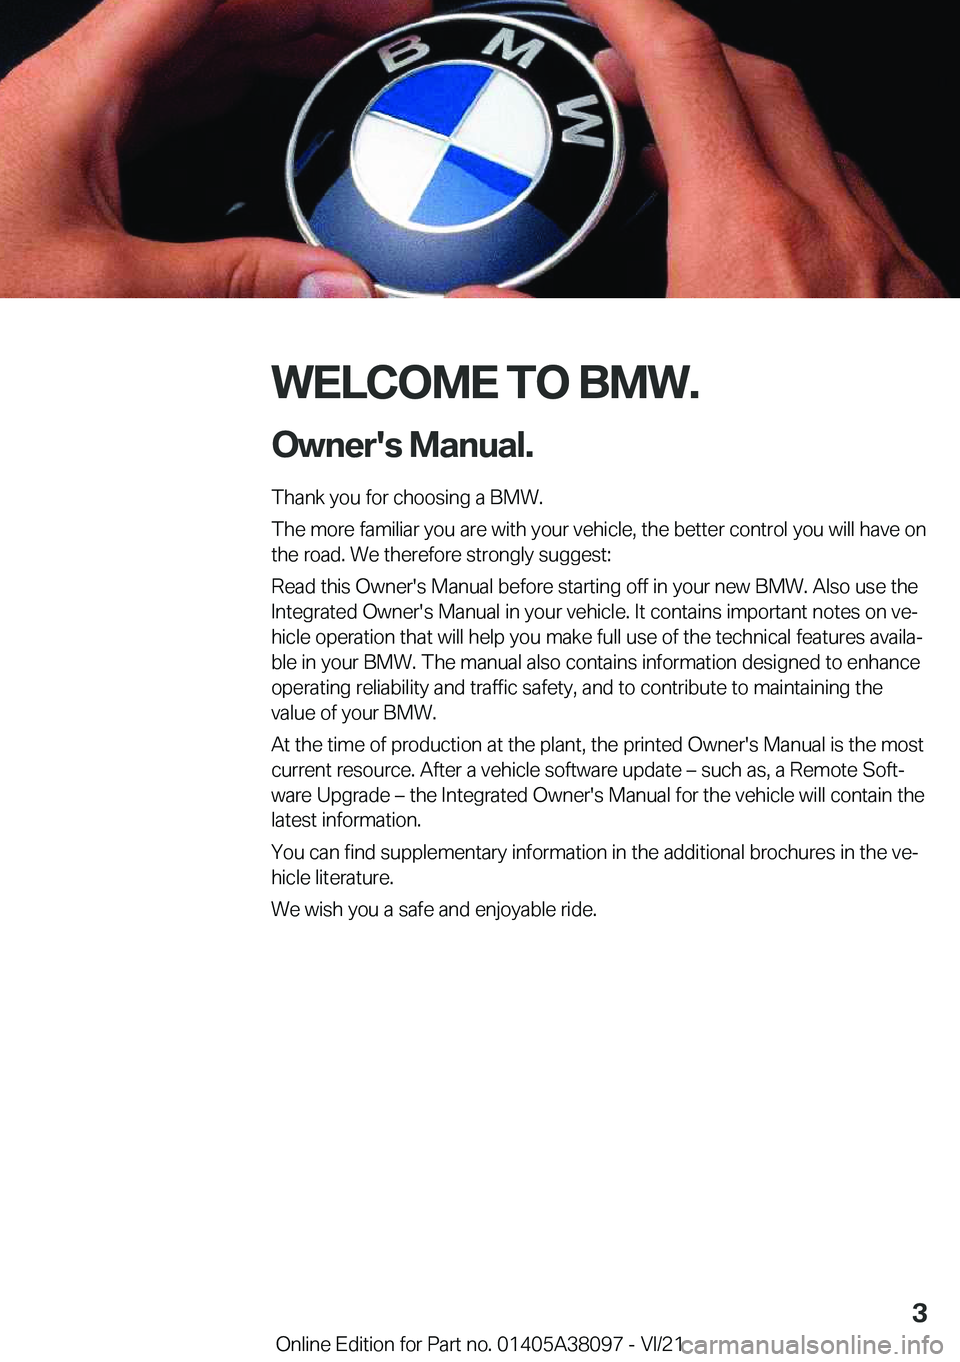 BMW M4 2022  Owners Manual �W�E�L�C�O�M�E��T�O��B�M�W�.�O�w�n�e�r�'�s��M�a�n�u�a�l�.
�T�h�a�n�k��y�o�u��f�o�r��c�h�o�o�s�i�n�g��a��B�M�W�.
�T�h�e��m�o�r�e��f�a�m�i�l�i�a�r��y�o�u��a�r�e��w�i�t�h��y�o�u�r��v�e